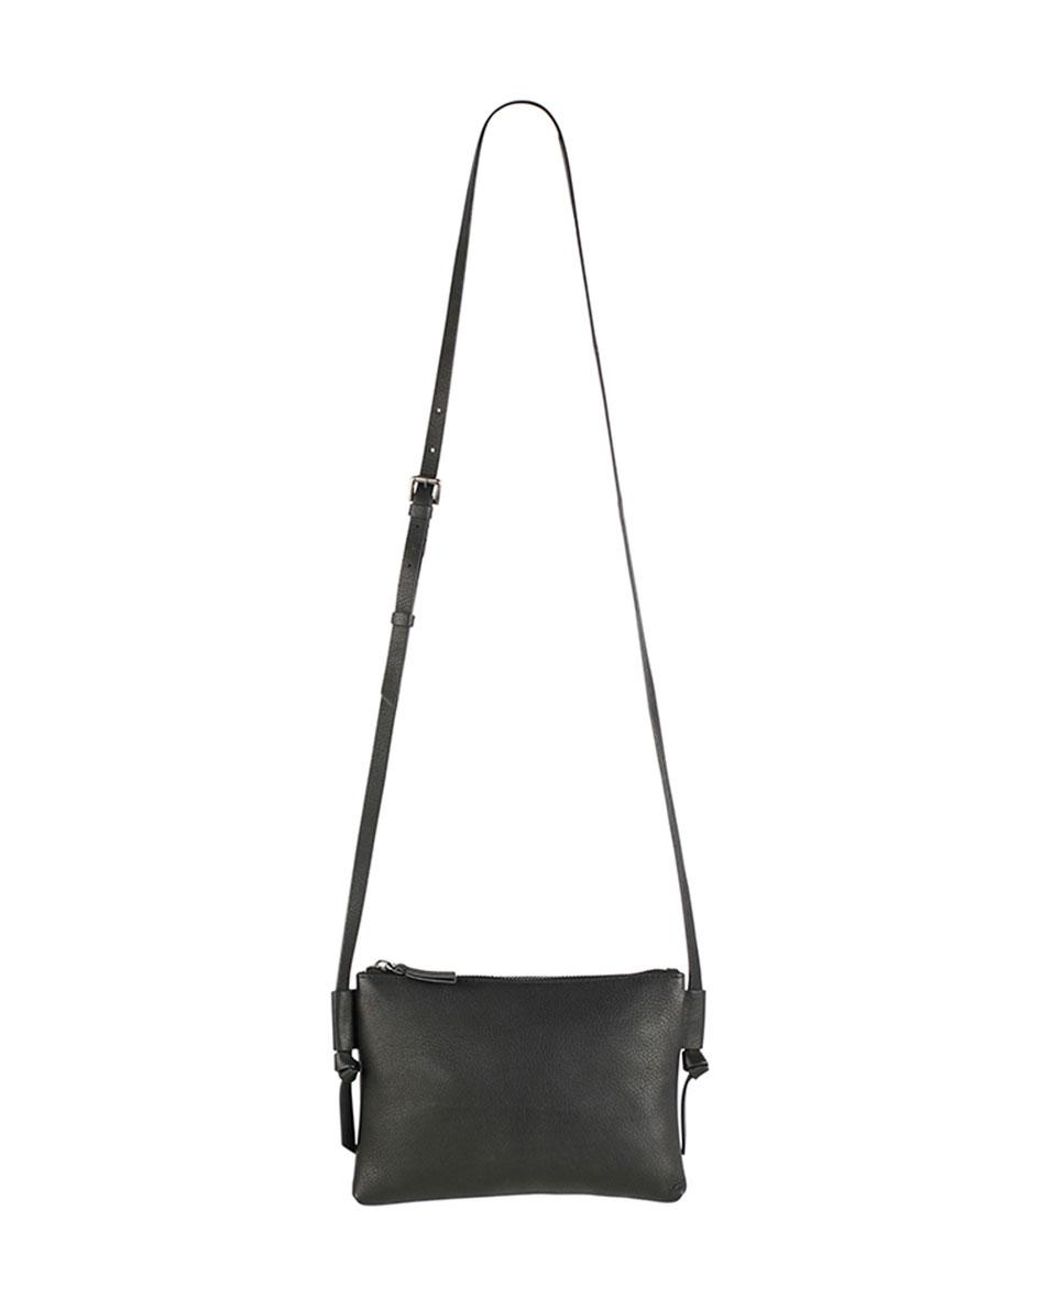 Markberg Leather Esma Crossbody Bag in Black - Lyst